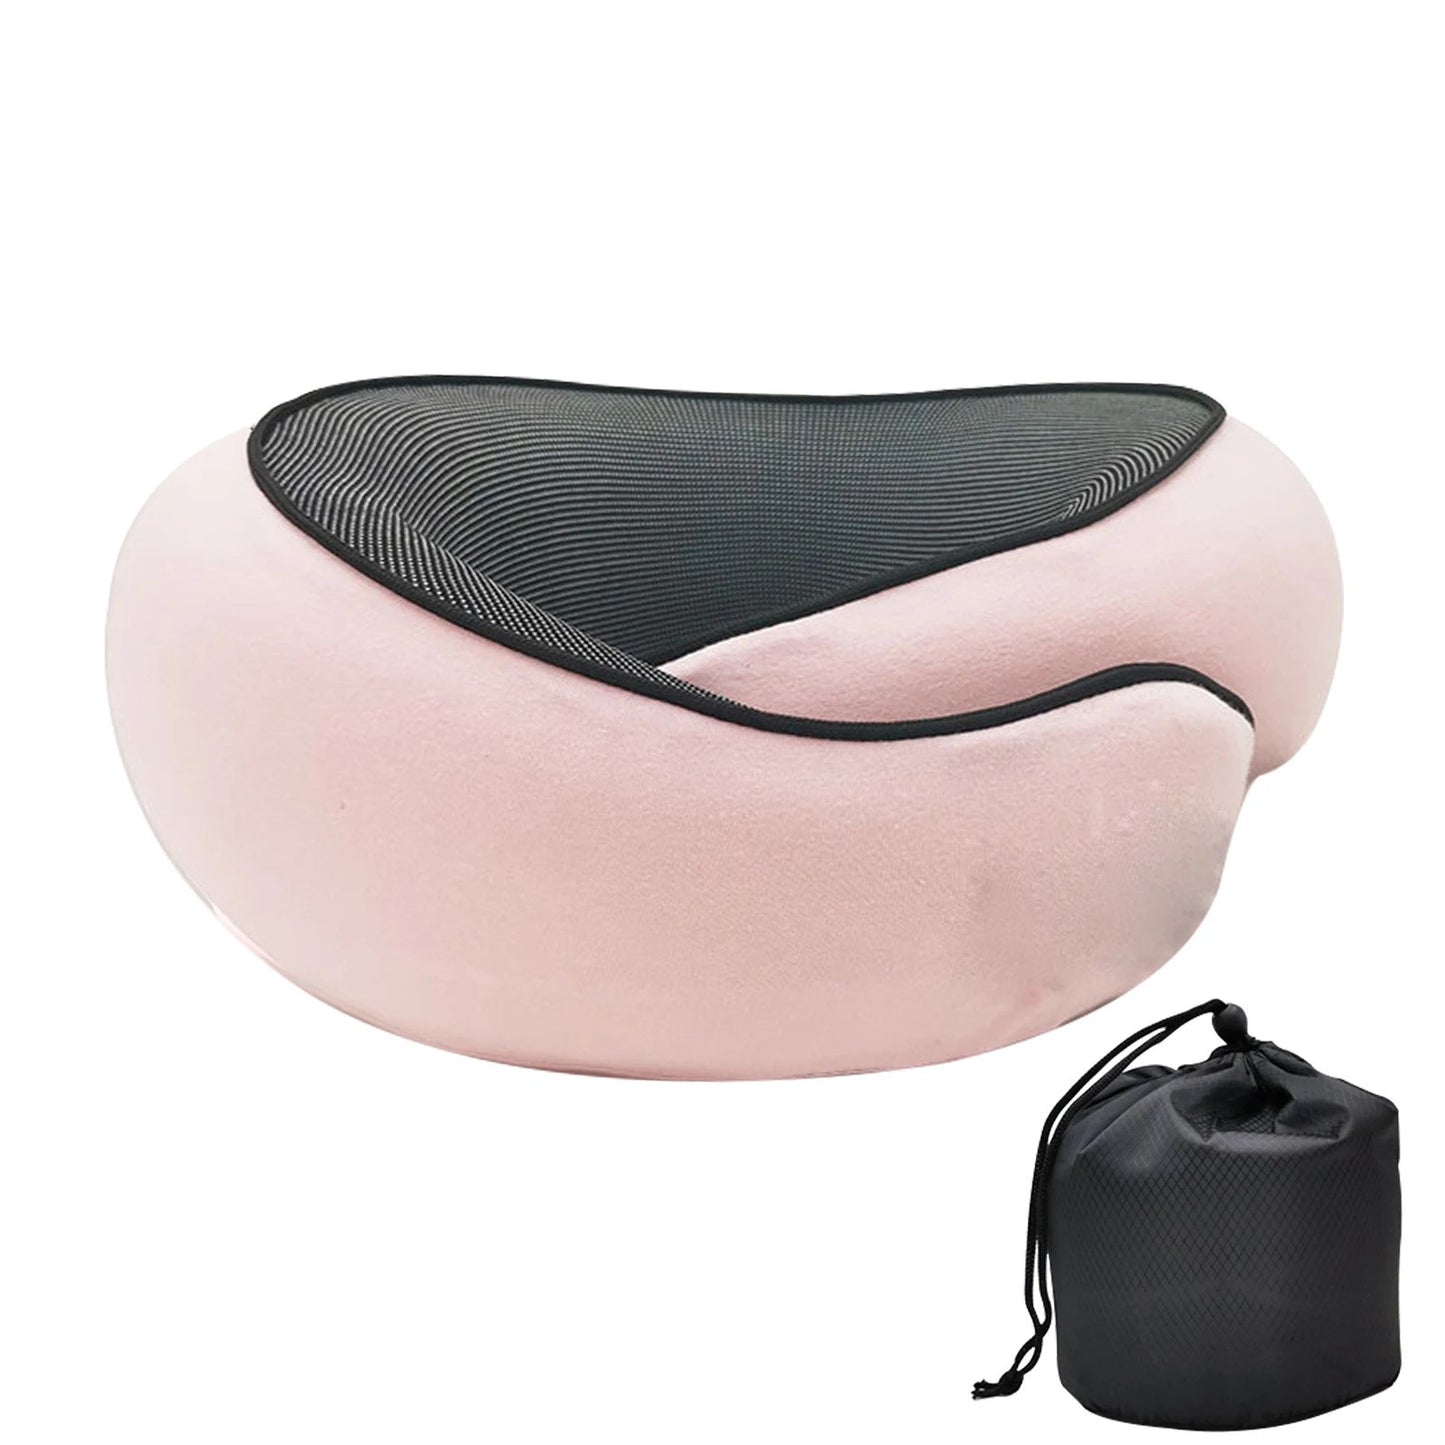 Bardi™ Snail-Style Memory Foam U-Shaped Travel Neck Pillow